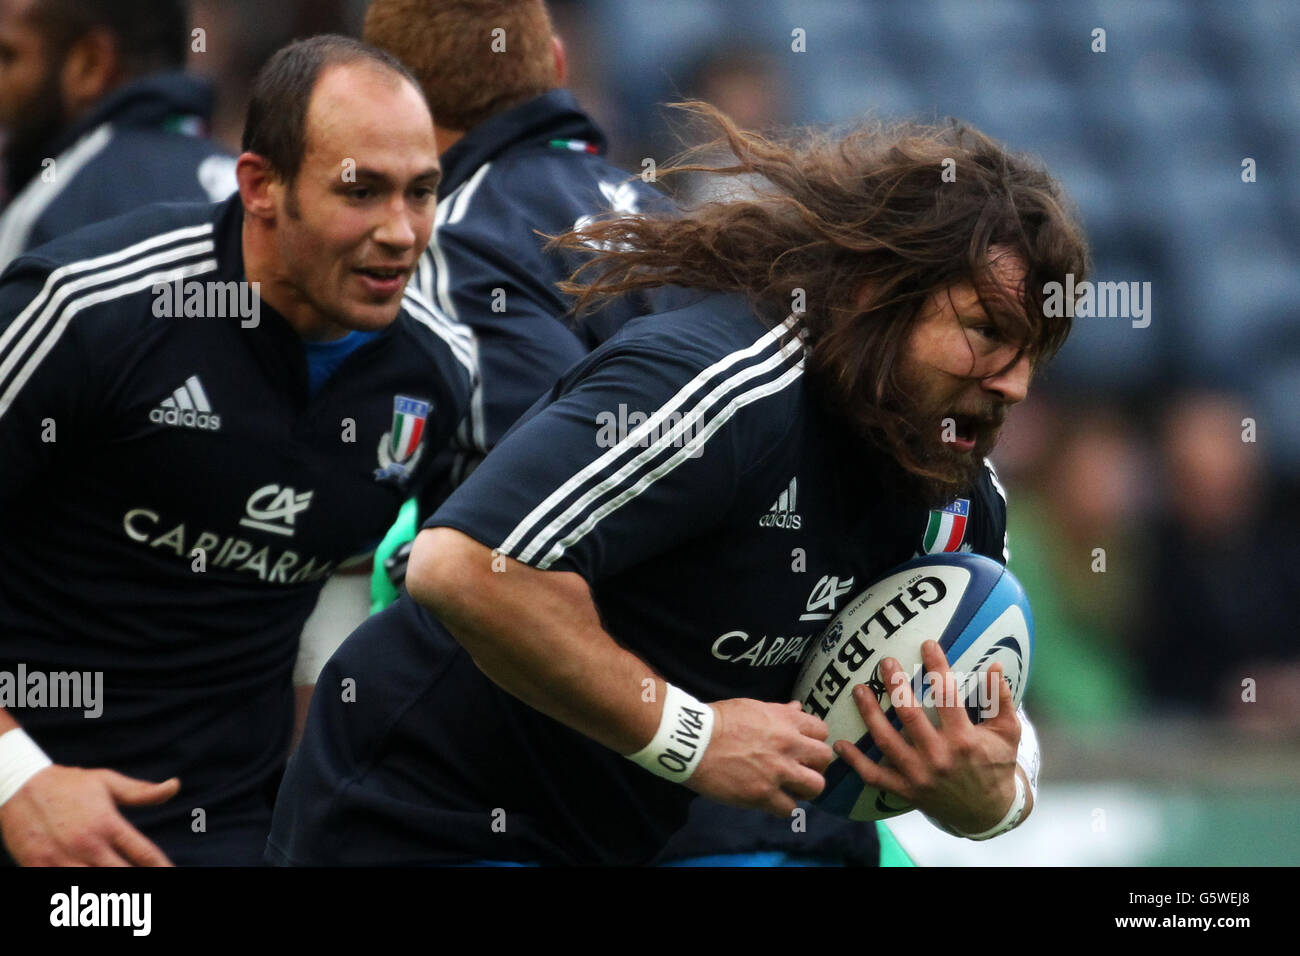 Rugby Union - The Six Nations Championship - Scotland v Italy - Murrayfield. Martin Castrogiovanni, Italy Stock Photo